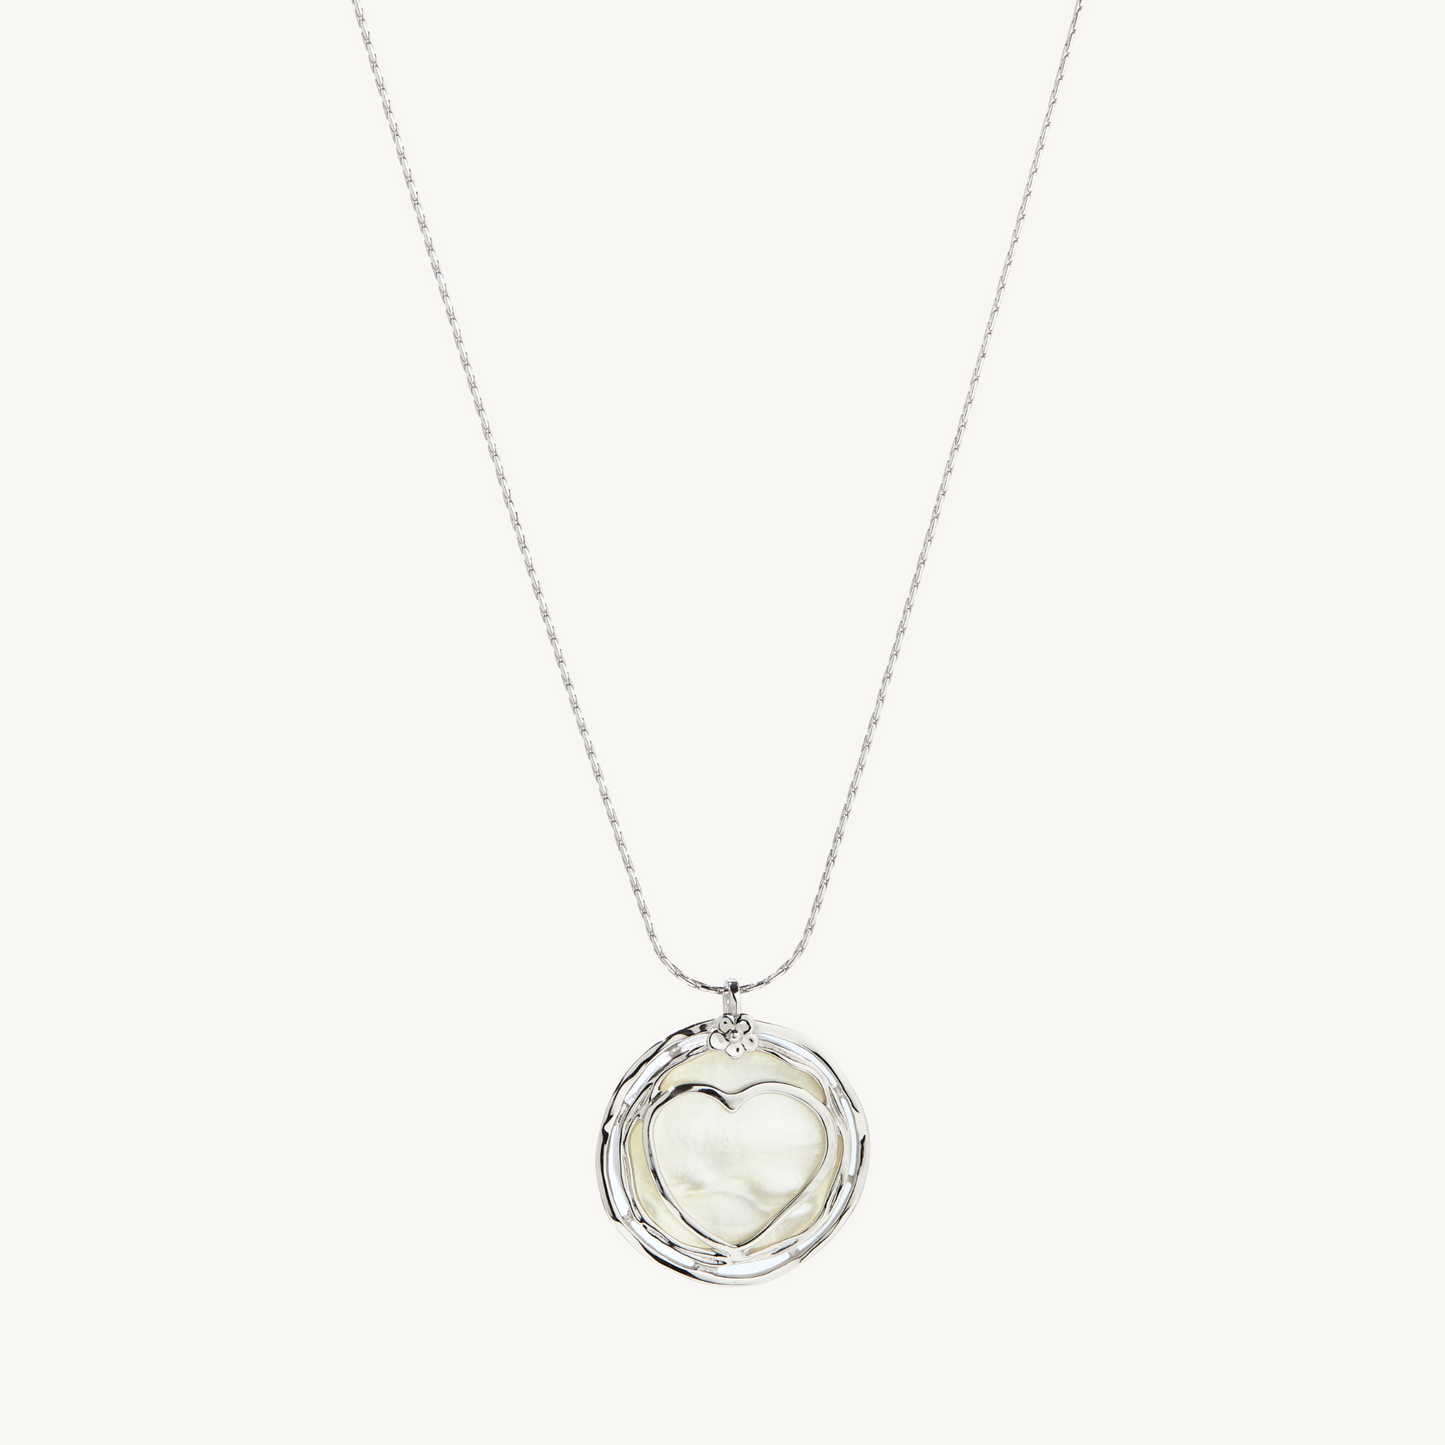 Leggra Heart Necklace